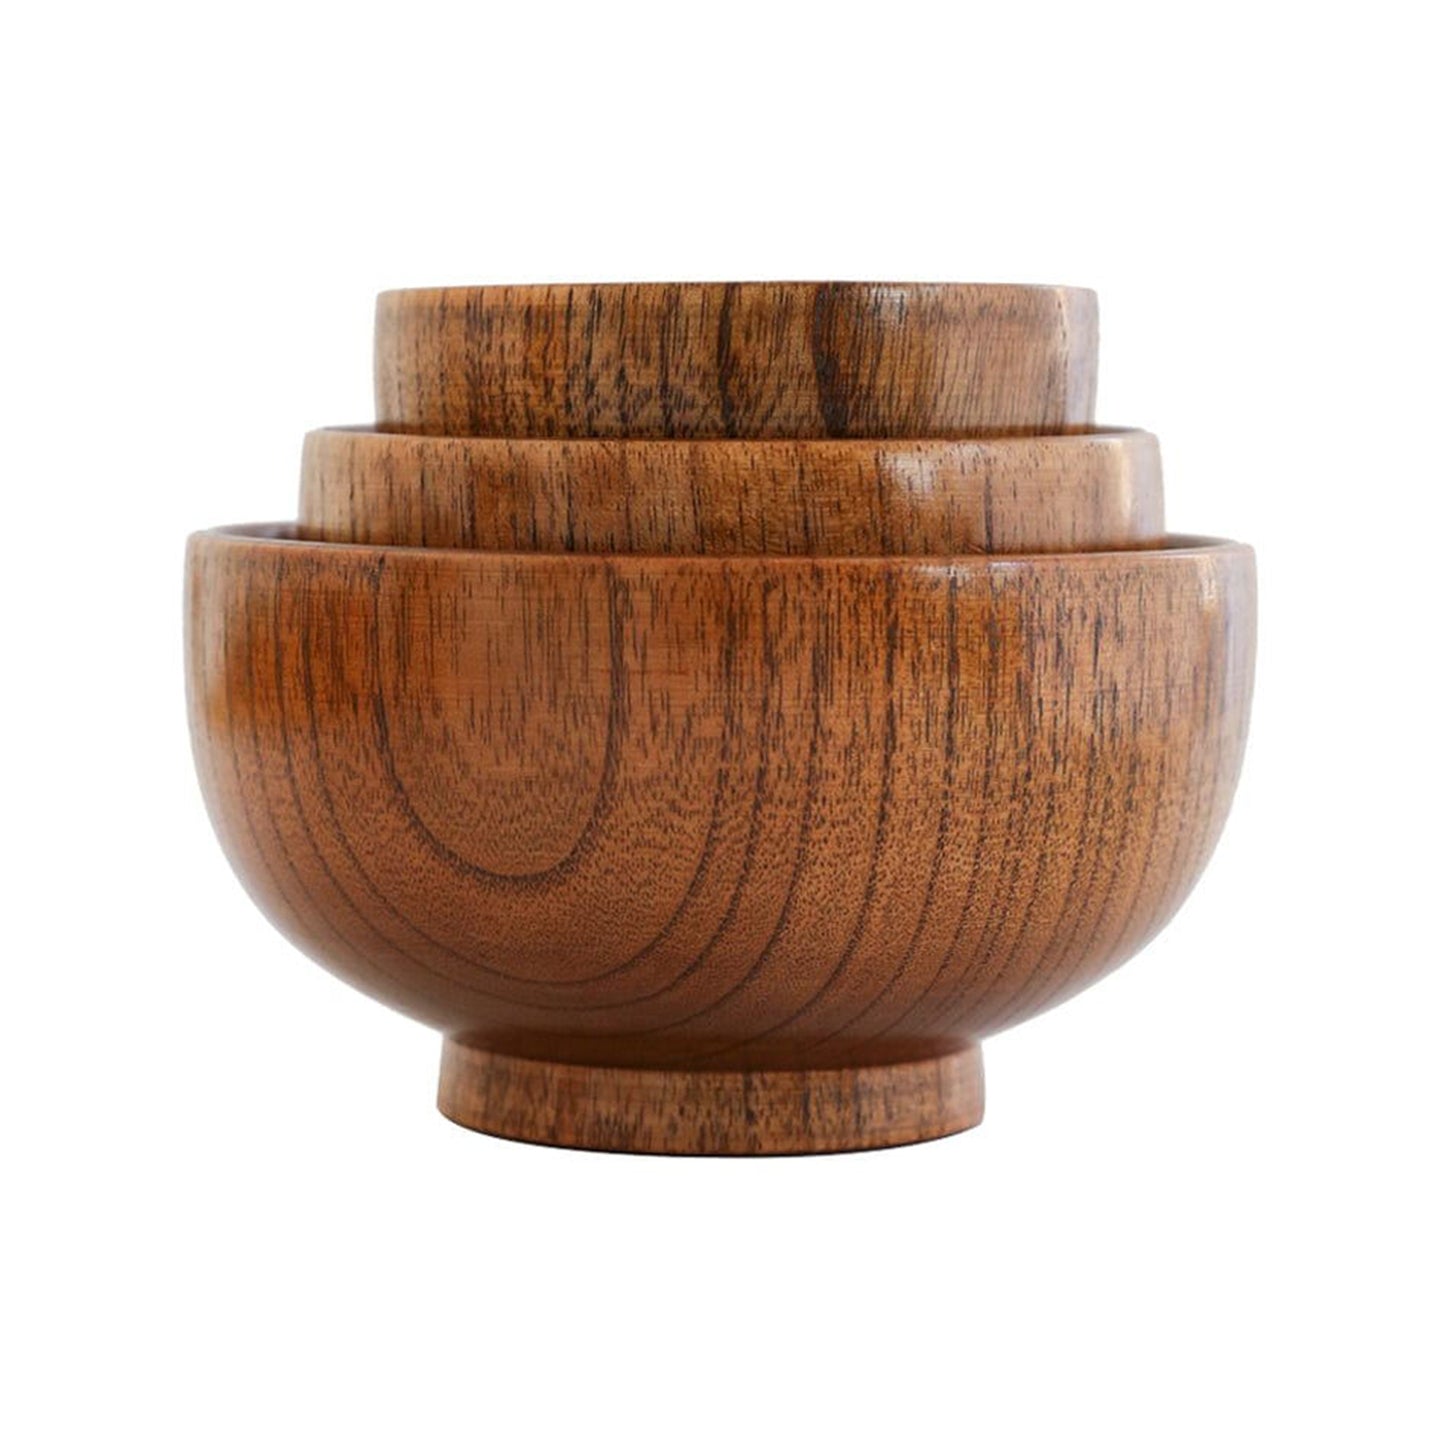 Jujube Wooden Bowl